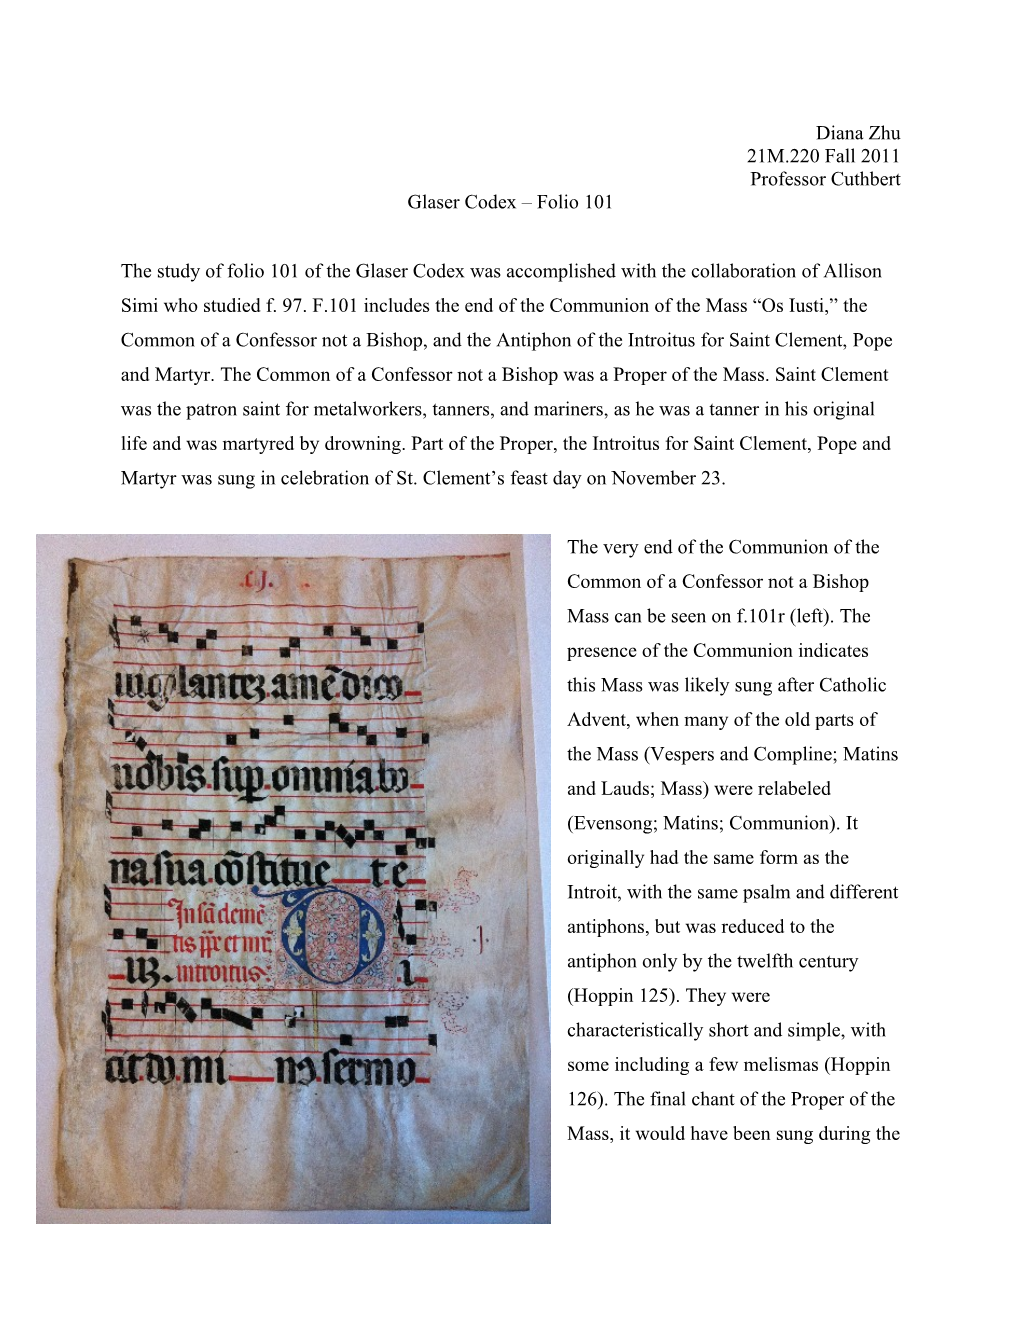 Diana Zhu 21M.220 Fall 2011 Professor Cuthbert Glaser Codex – Folio 101